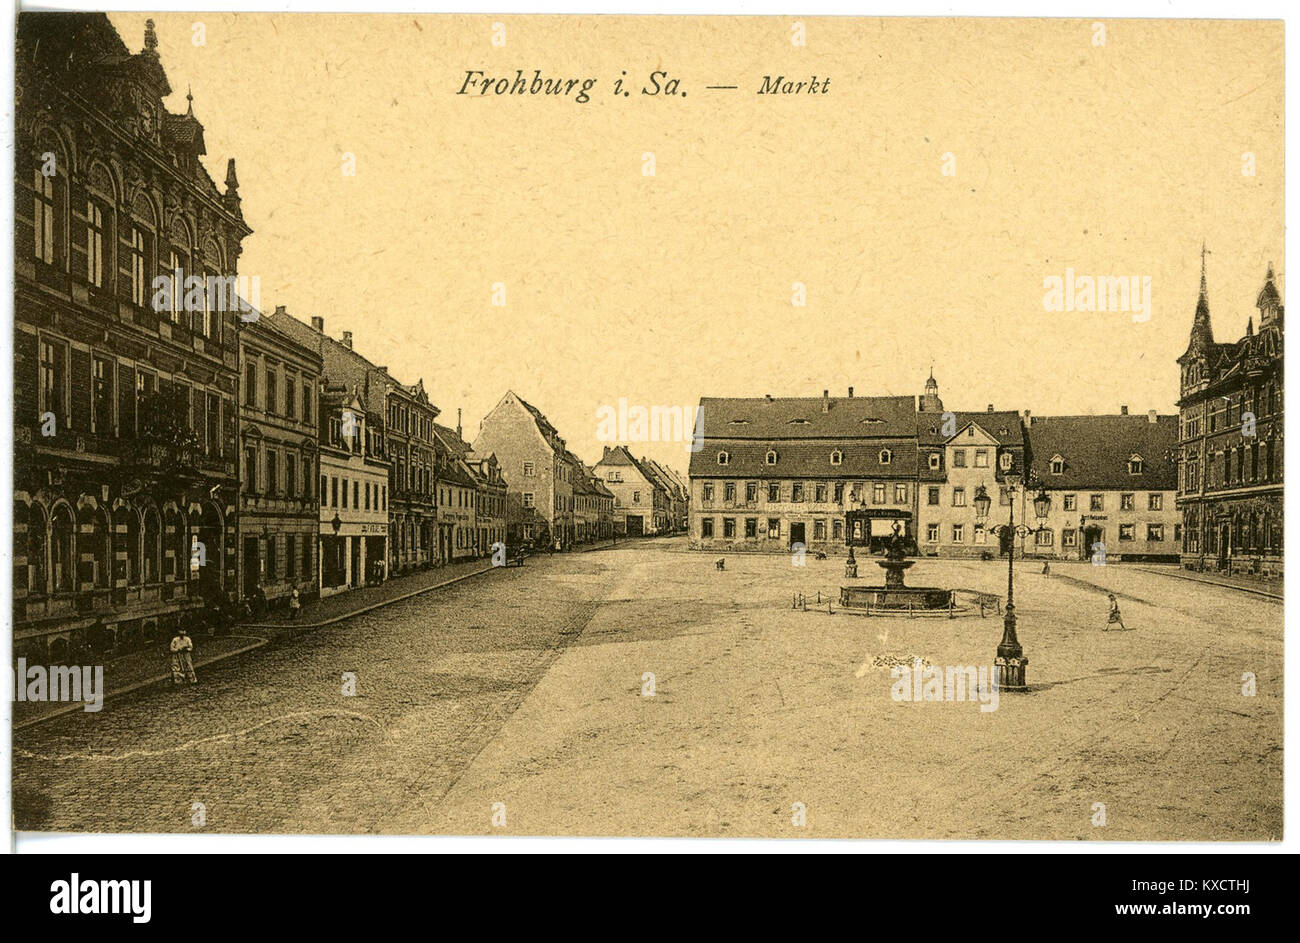 21659 - Frohburg-1920 - Markt-Brück&Sohn Kunstverlag Stockfoto